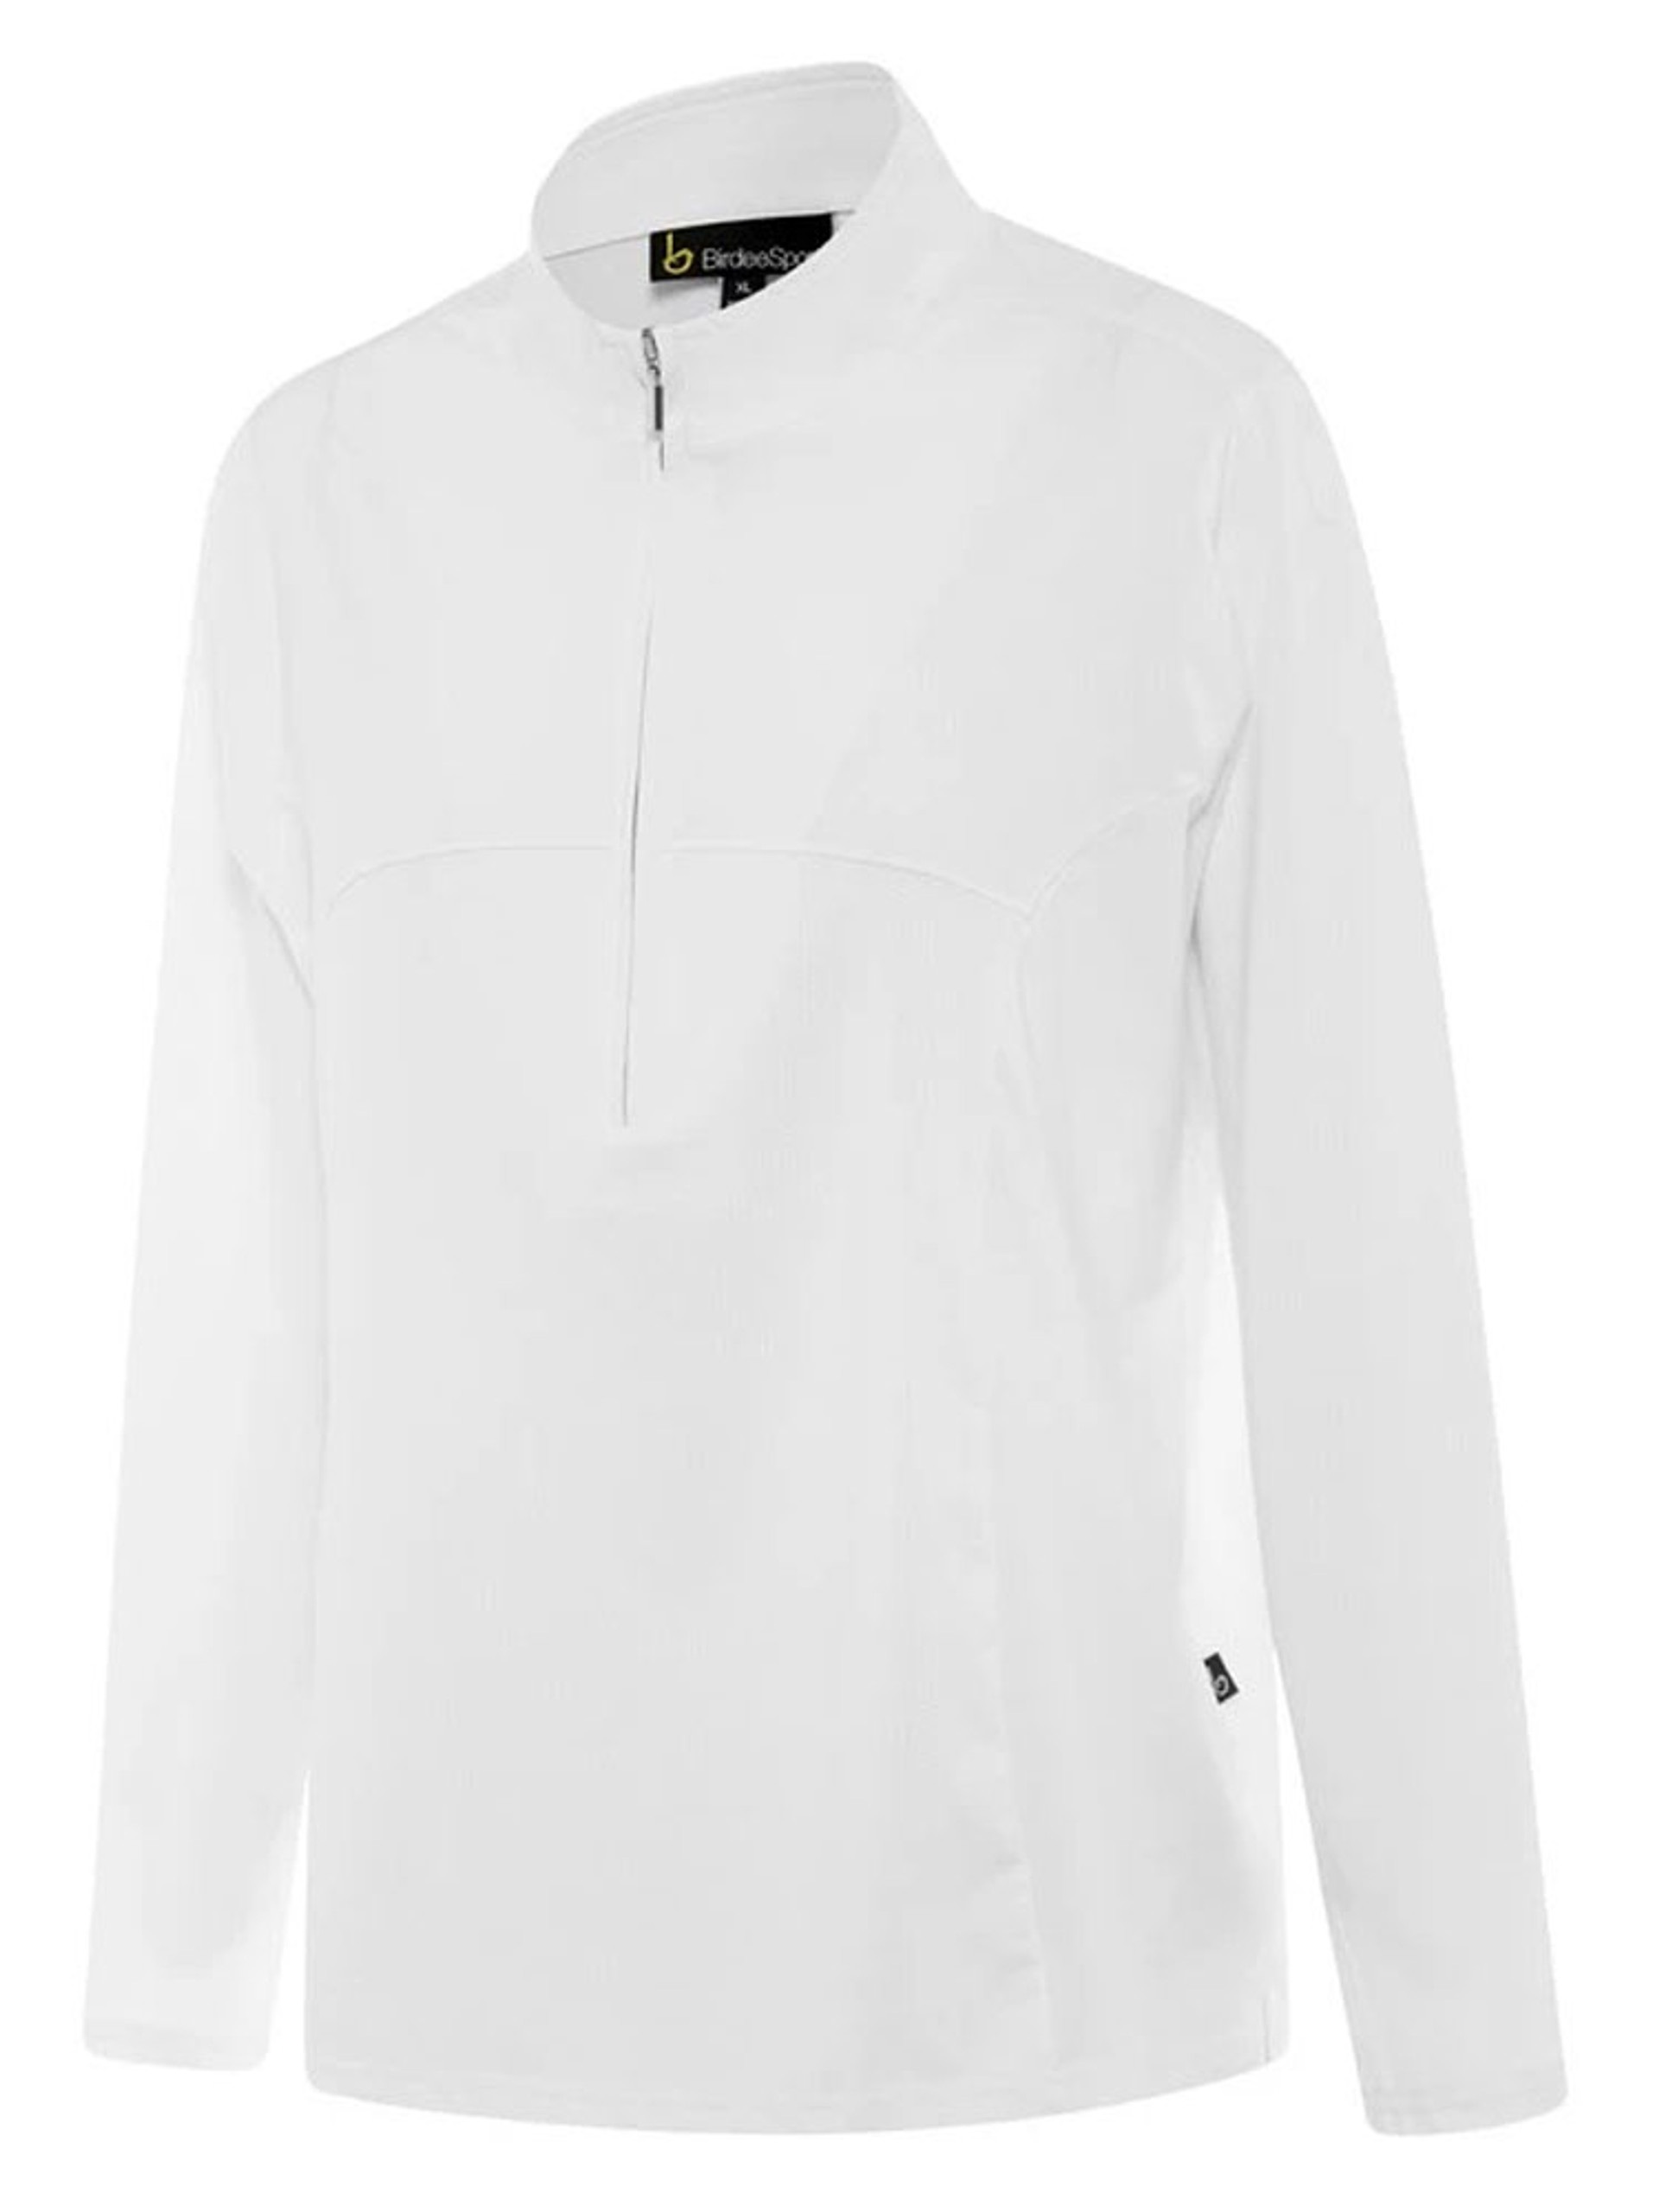 Birdee Sport Women's Breeze UV Long Sleeve Top - White | GolfBox